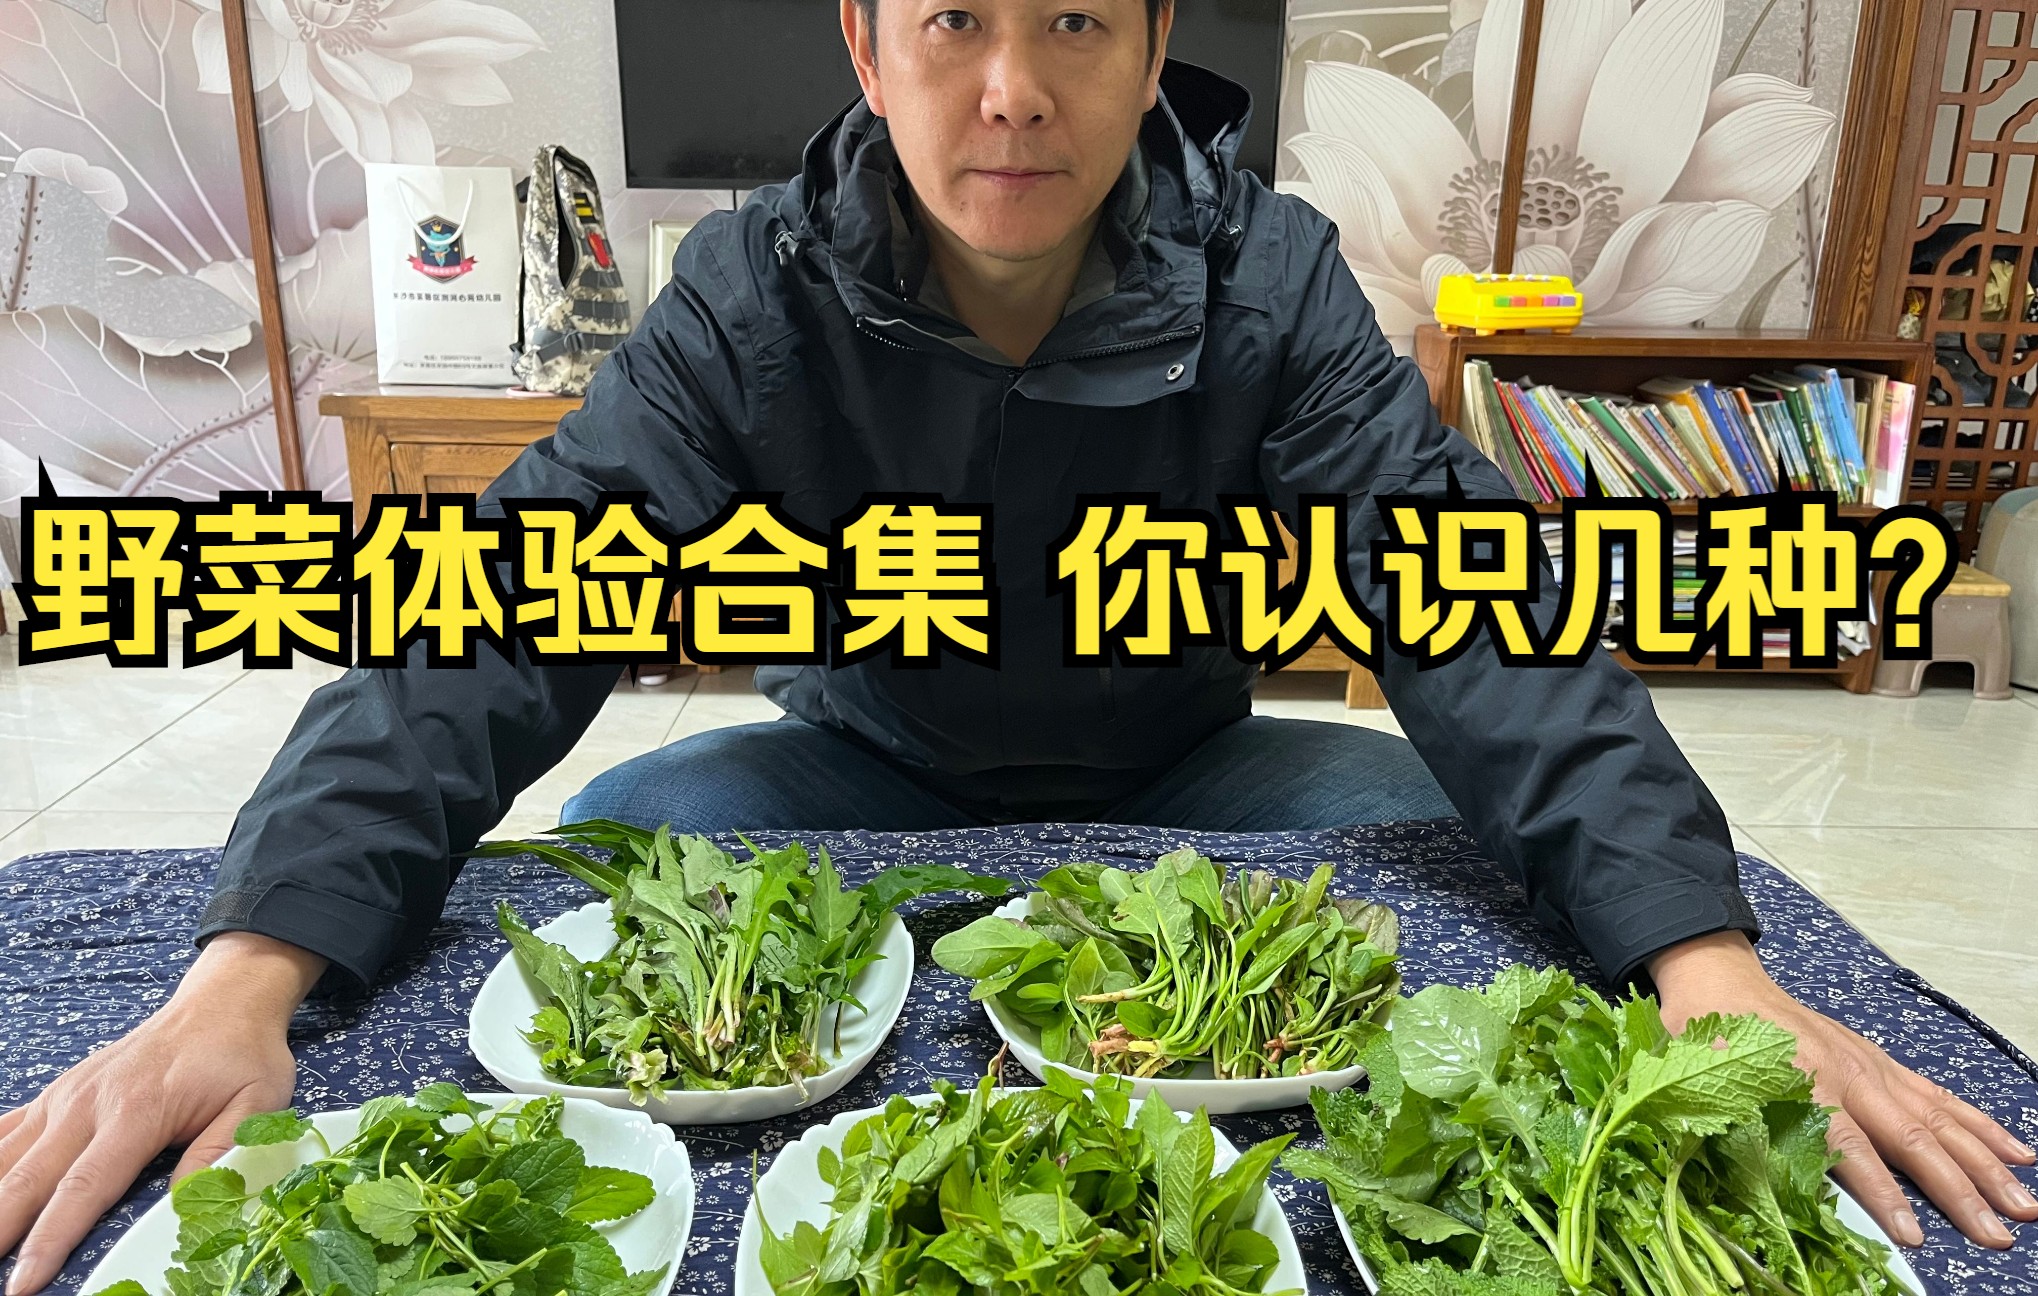 1/4oz 2500 Small GAI CHOI Mustard Green seeds 小芥菜 | Etsy